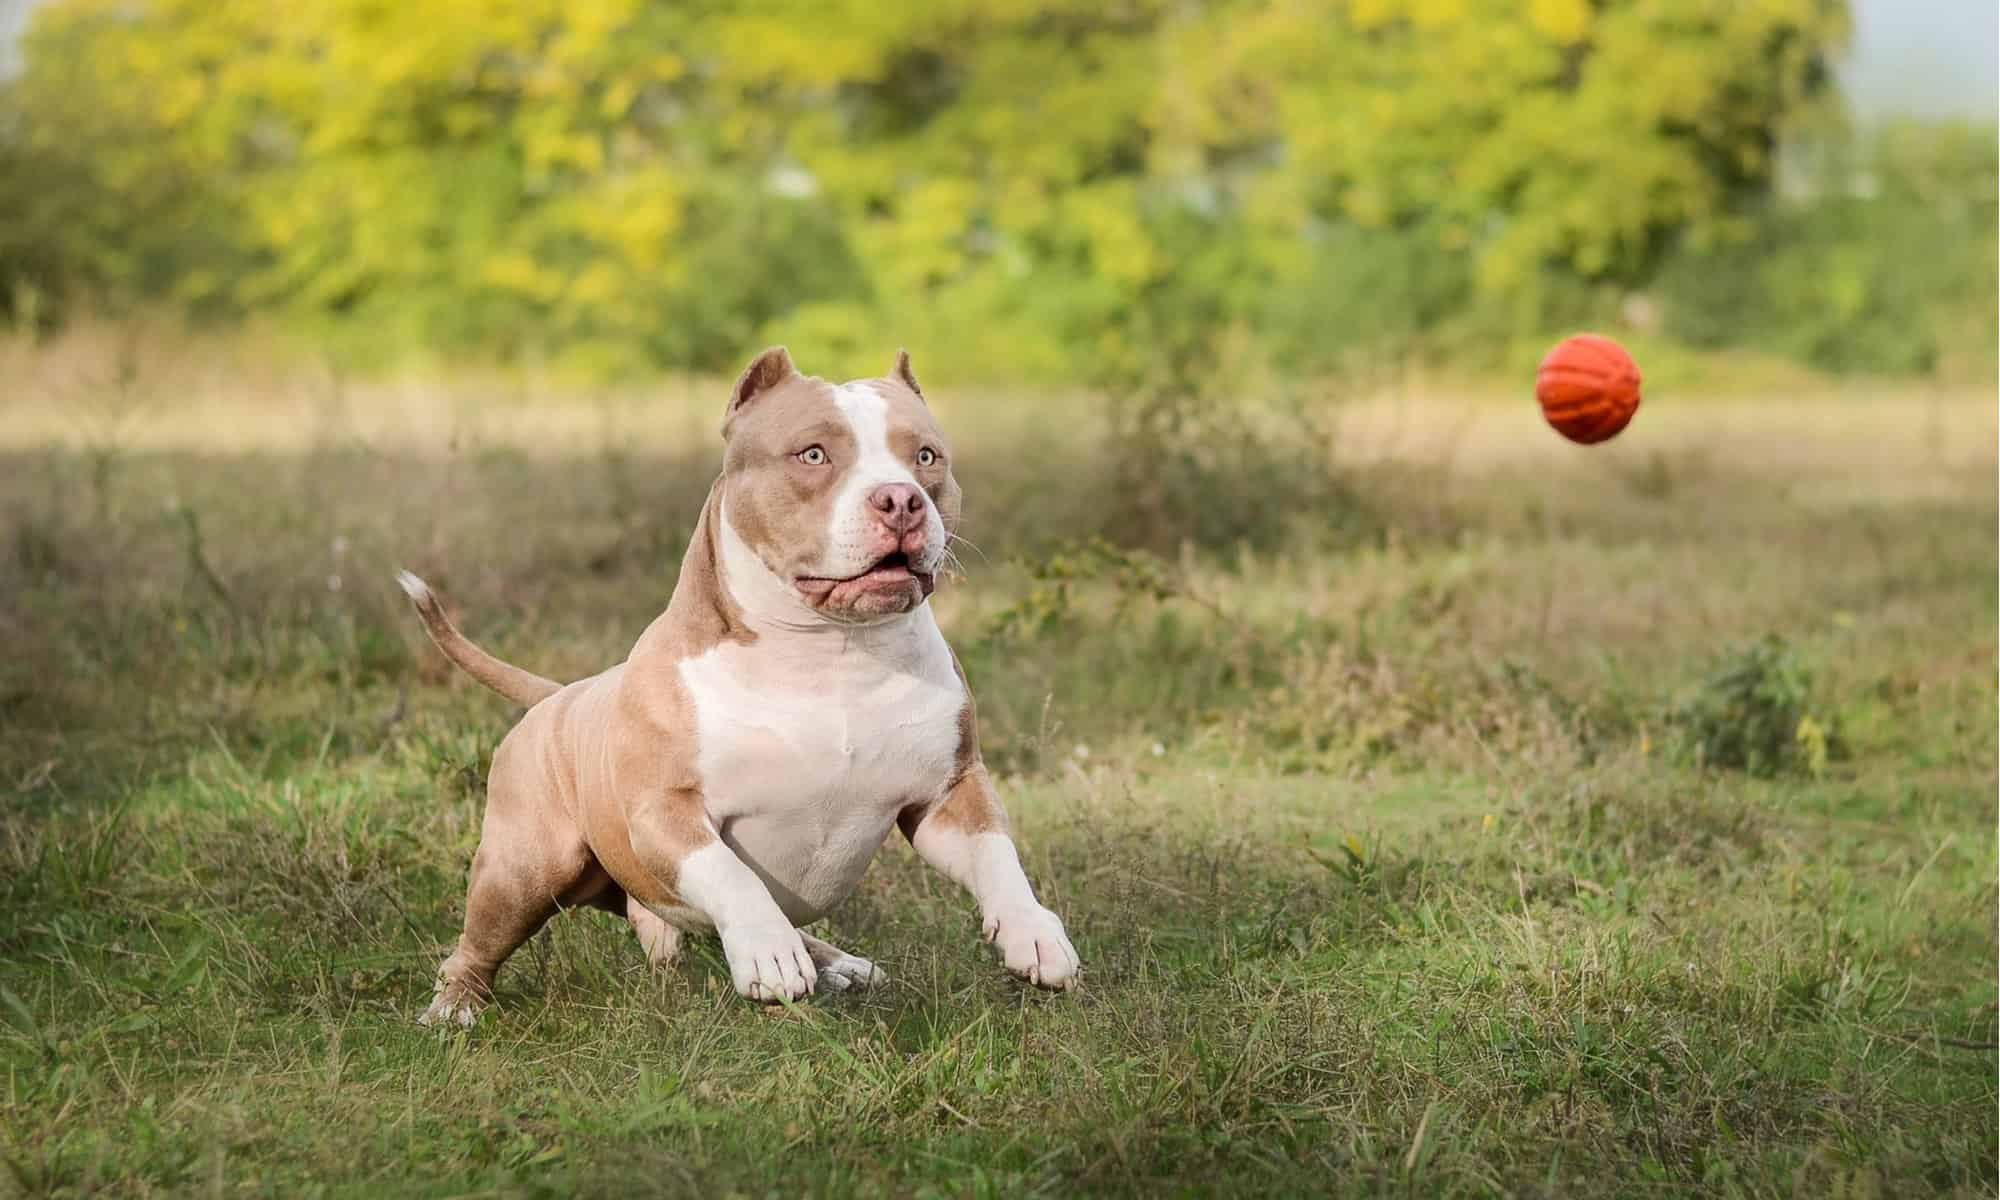 Pocket bully: Dog Breed Characteristics – Paws & Pup